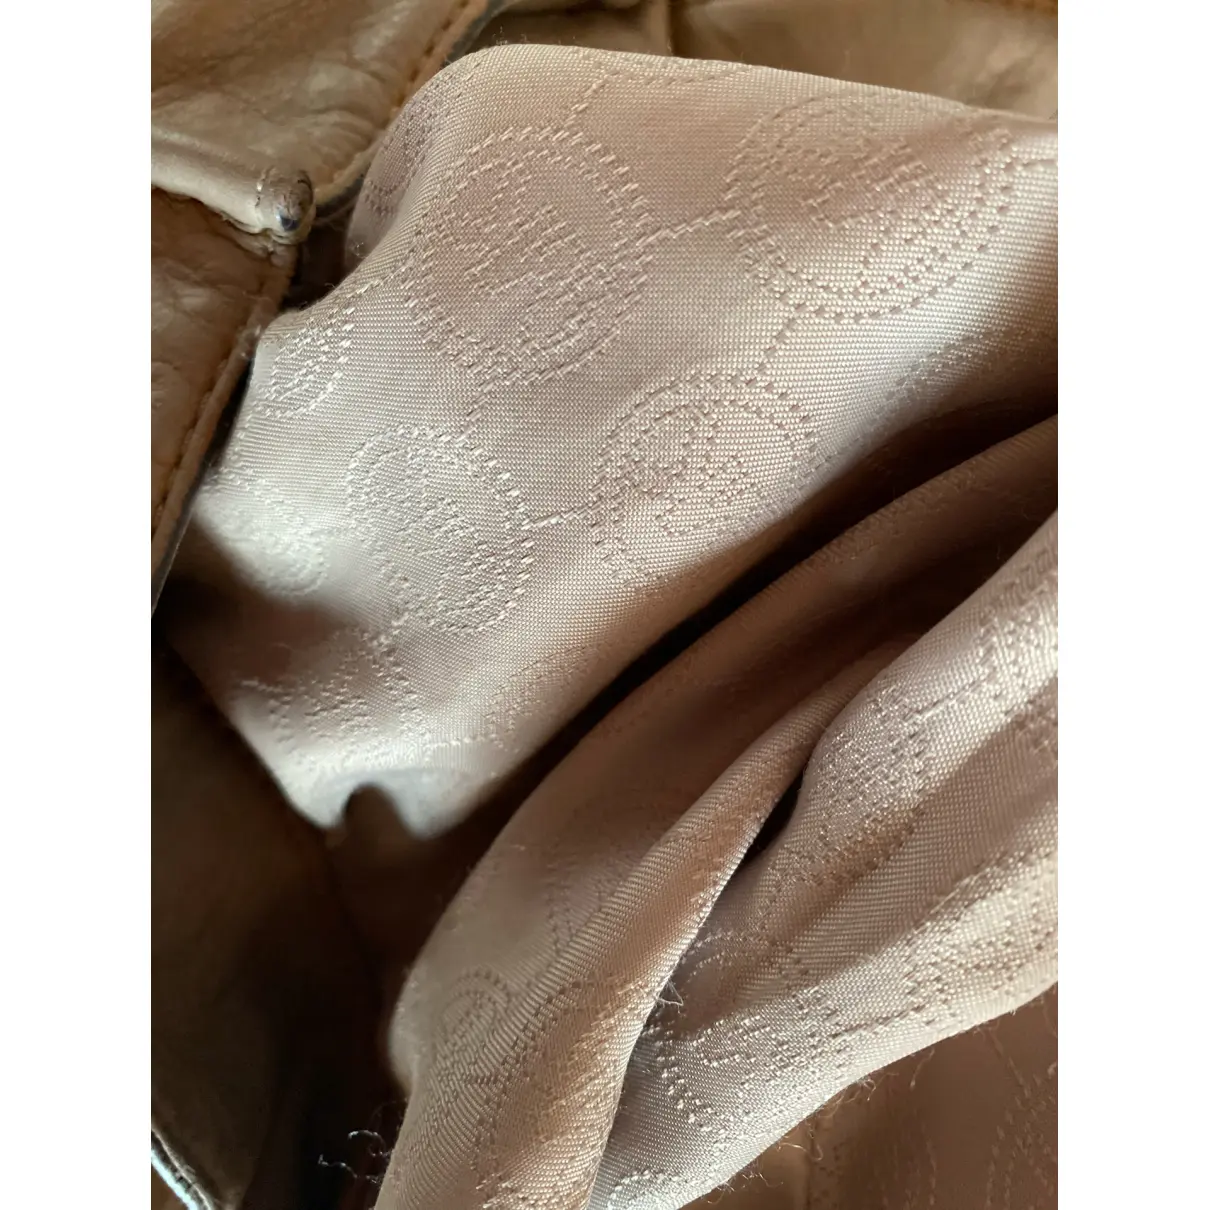 Brooklyn leather handbag Michael Kors